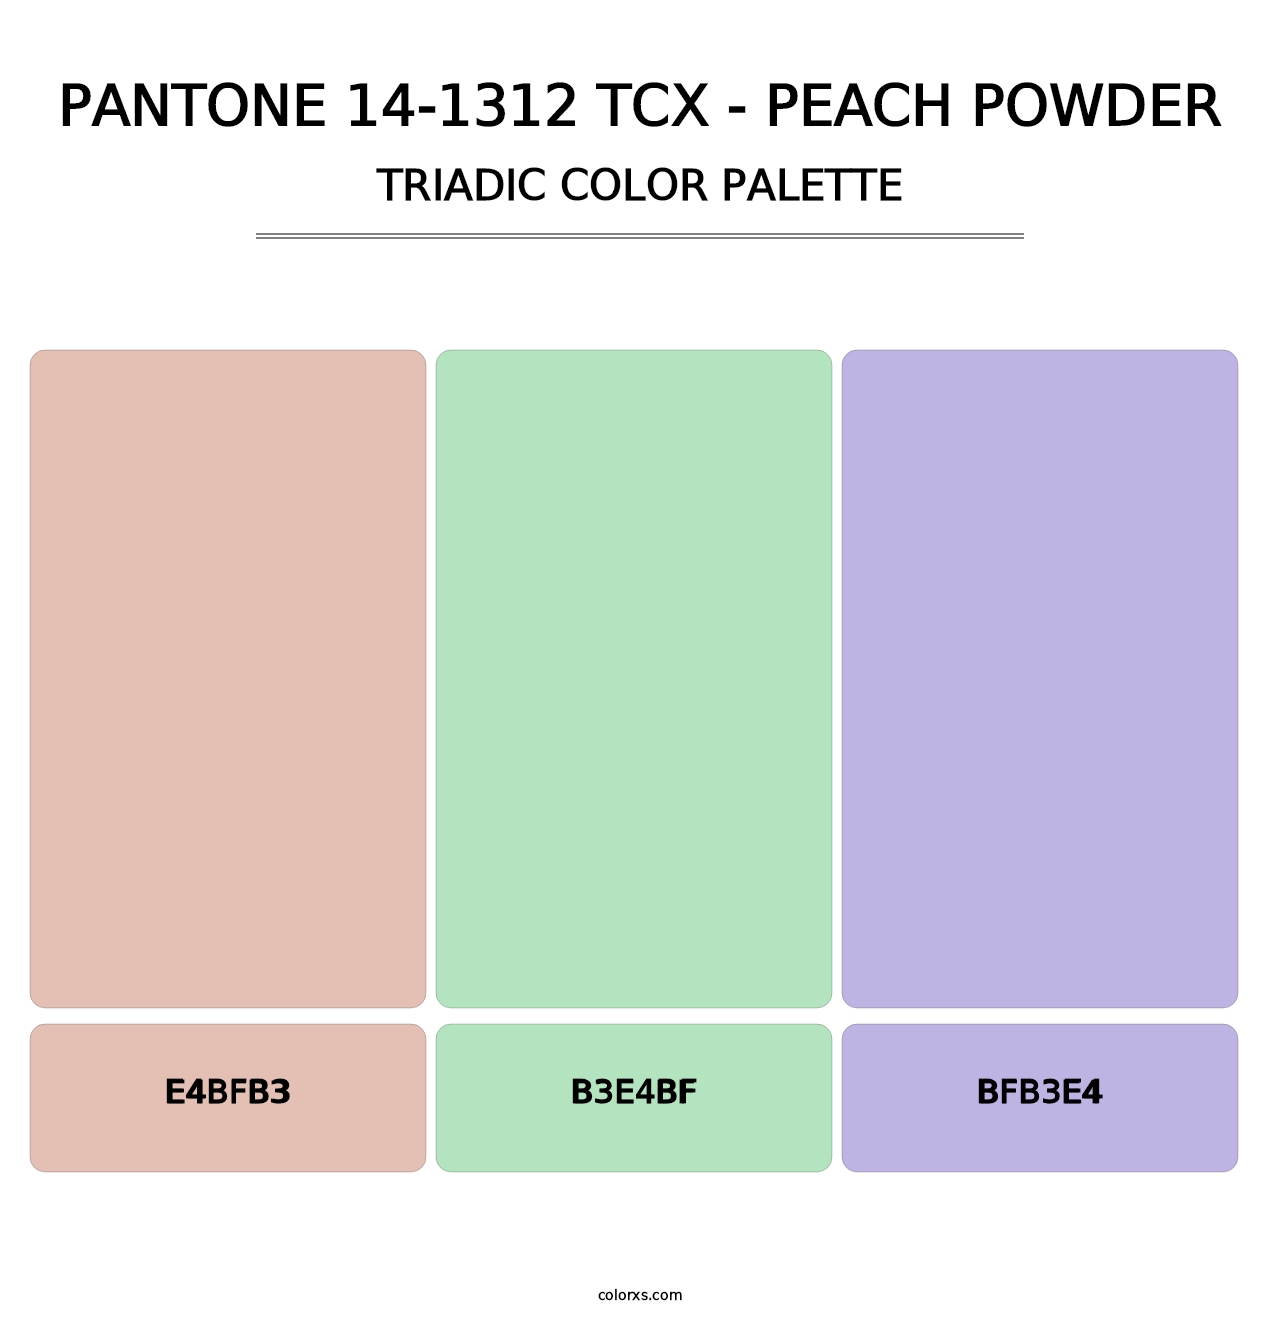 PANTONE 14-1312 TCX - Peach Powder - Triadic Color Palette